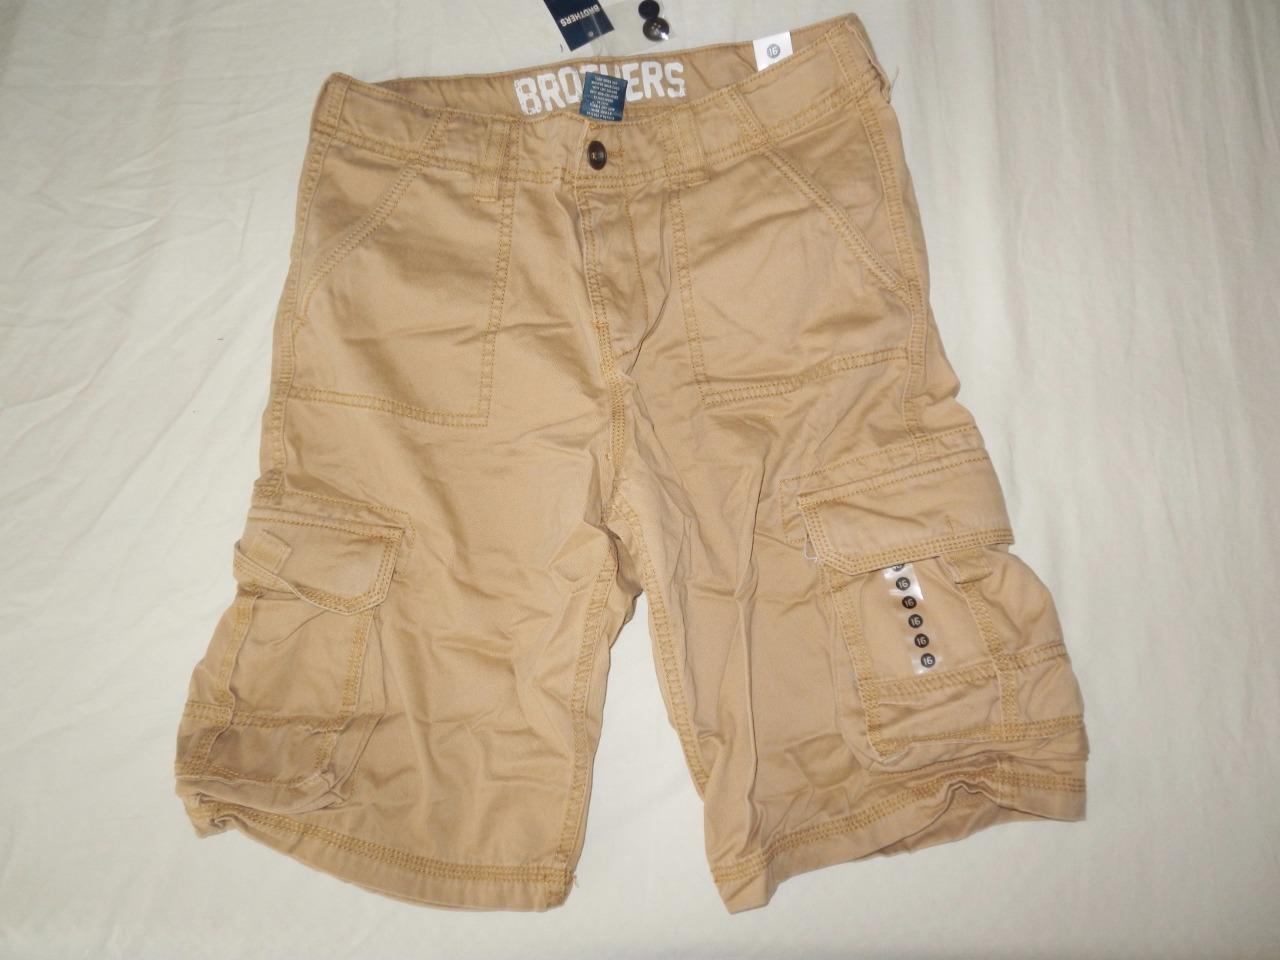 New Boy's Brothers Cargo Shorts - Size 14, 16 - NWT - 3 Styles! | eBay